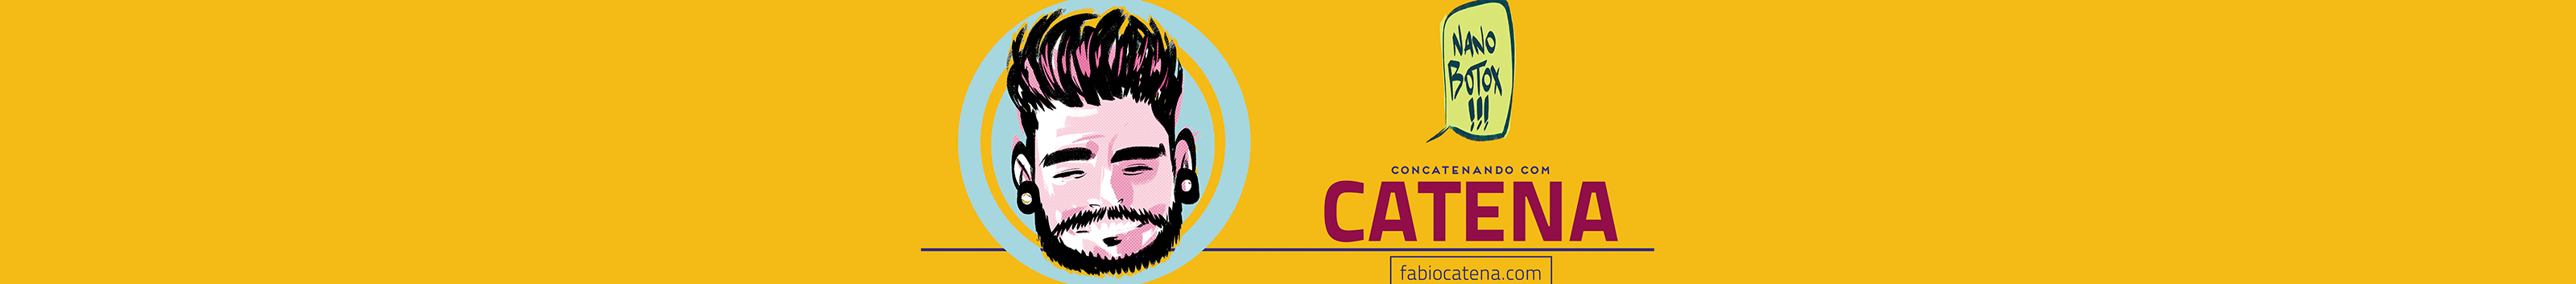 Fábio Catena's profile banner